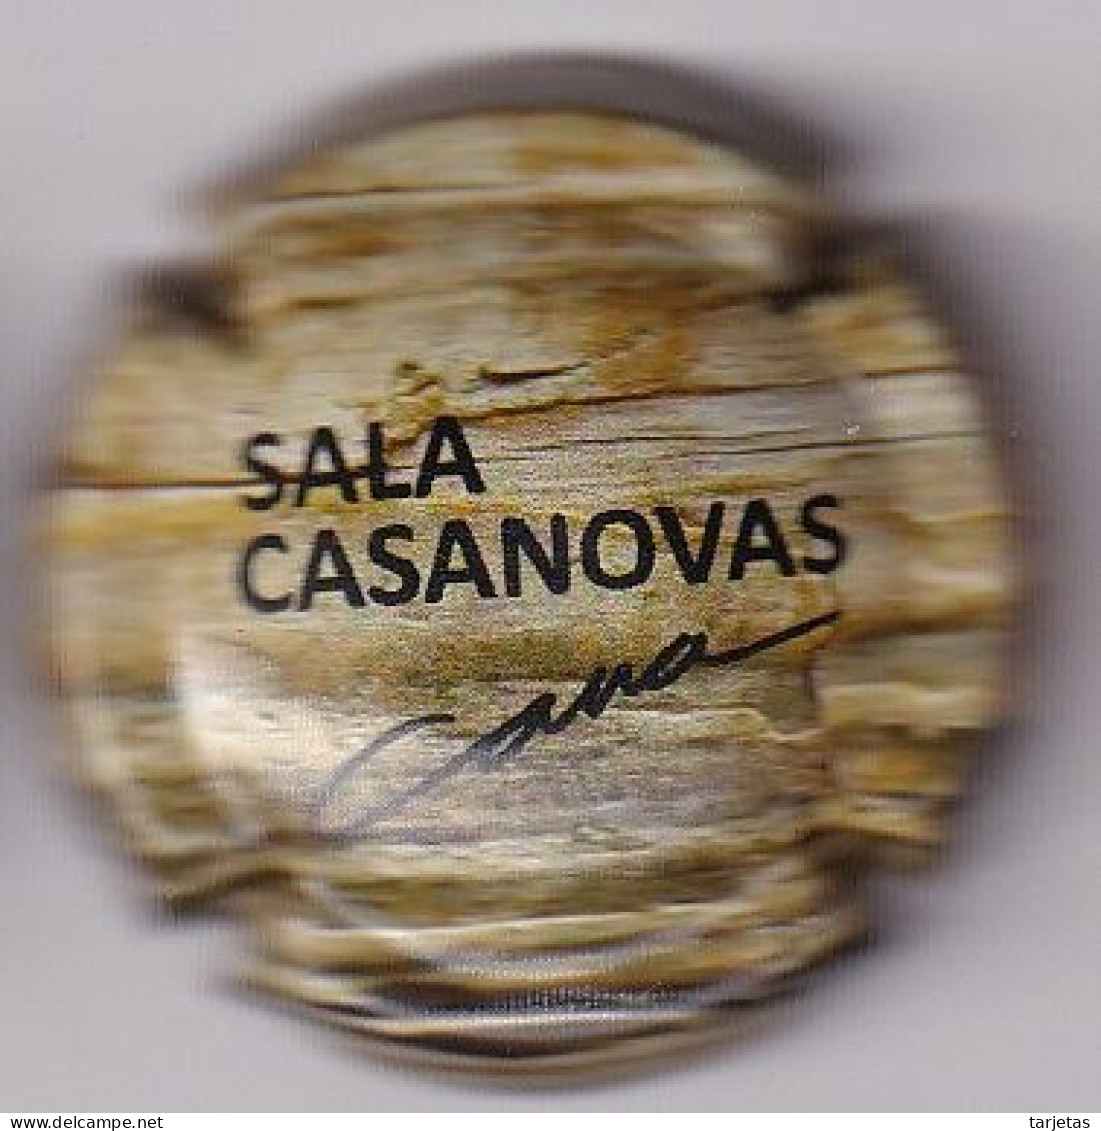 PLACA DE CAVA SALA CASANOVAS (CAPSULE) - Schaumwein - Sekt